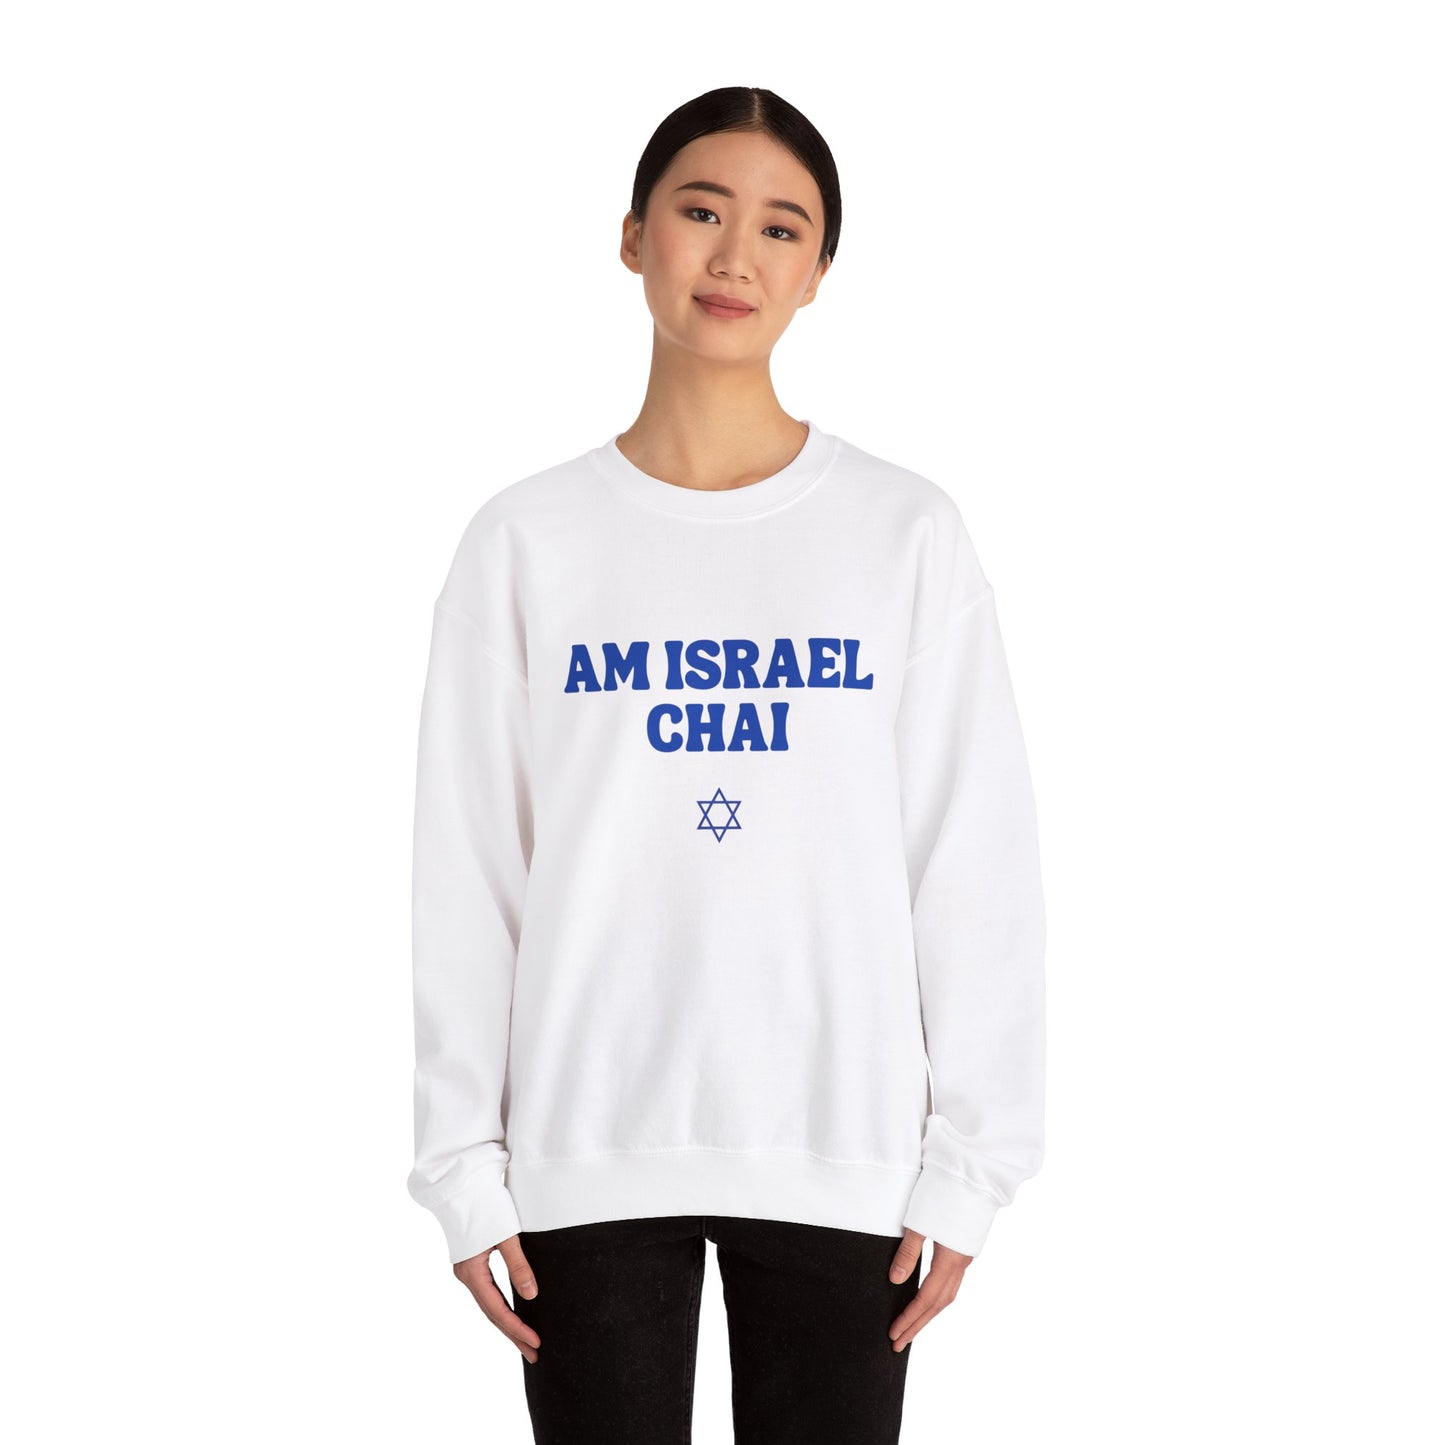 Am Israel Chai sweatshirt